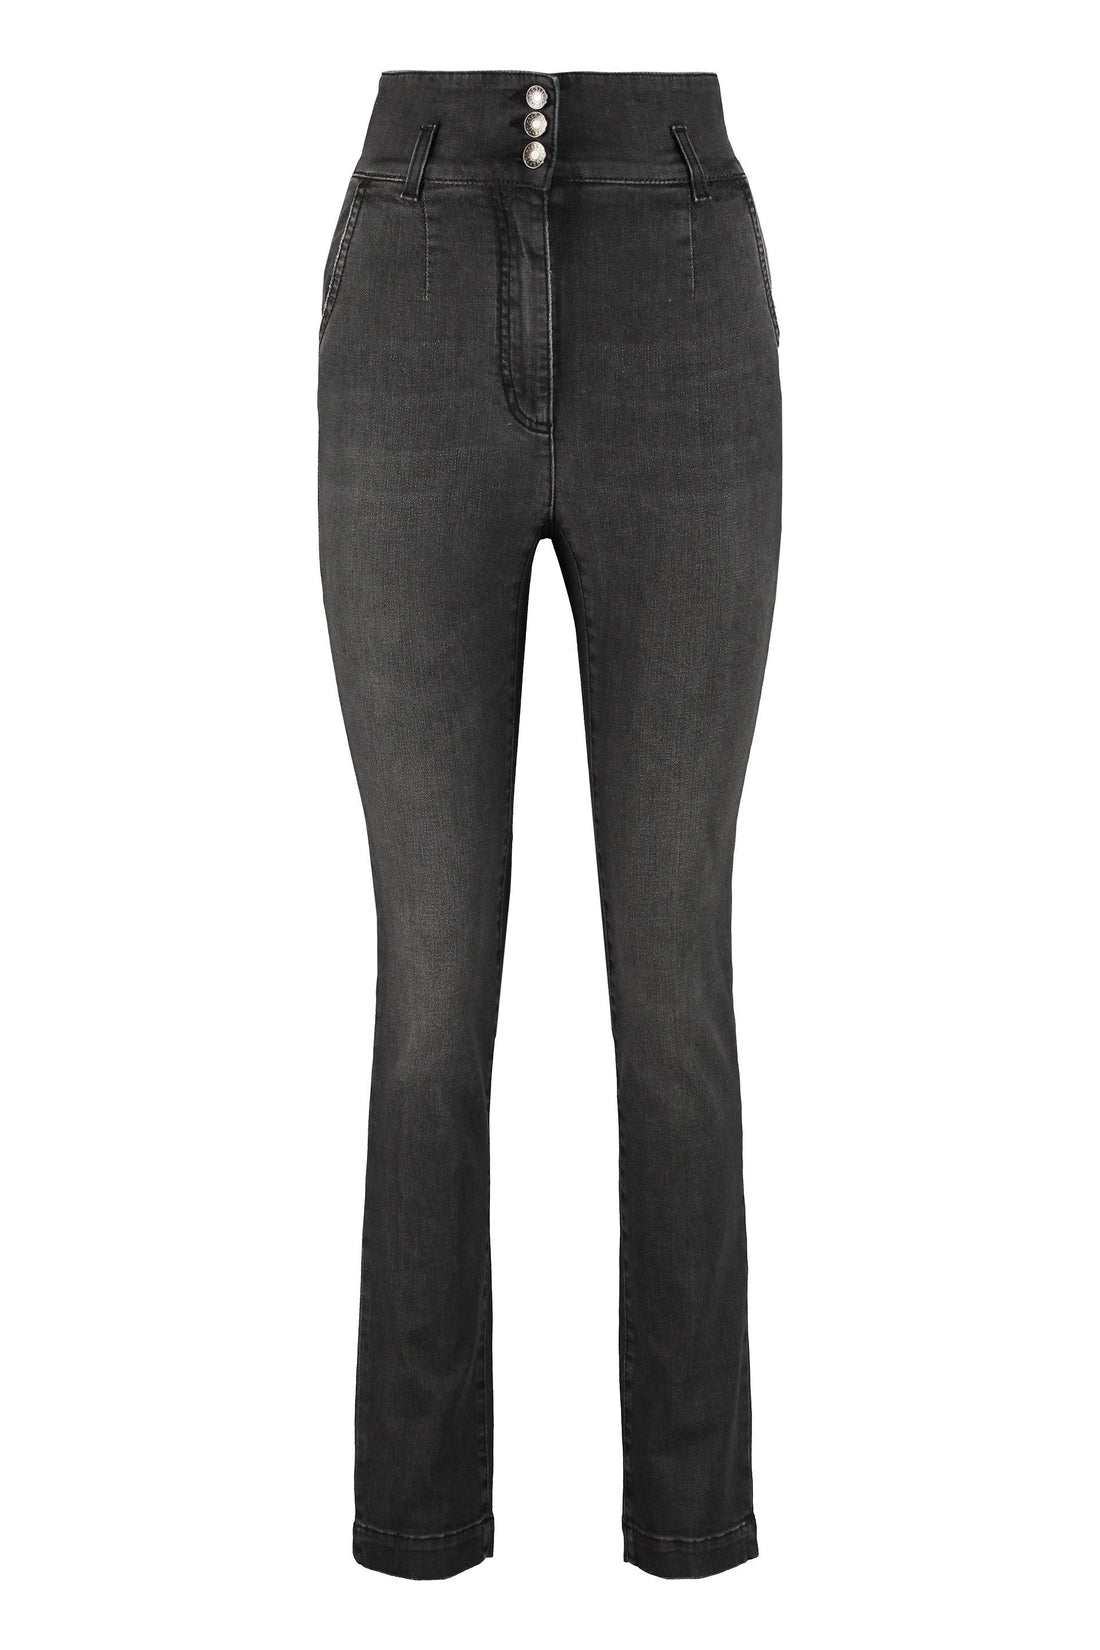 Dolce & Gabbana-OUTLET-SALE-High-rise slim fit jeans-ARCHIVIST